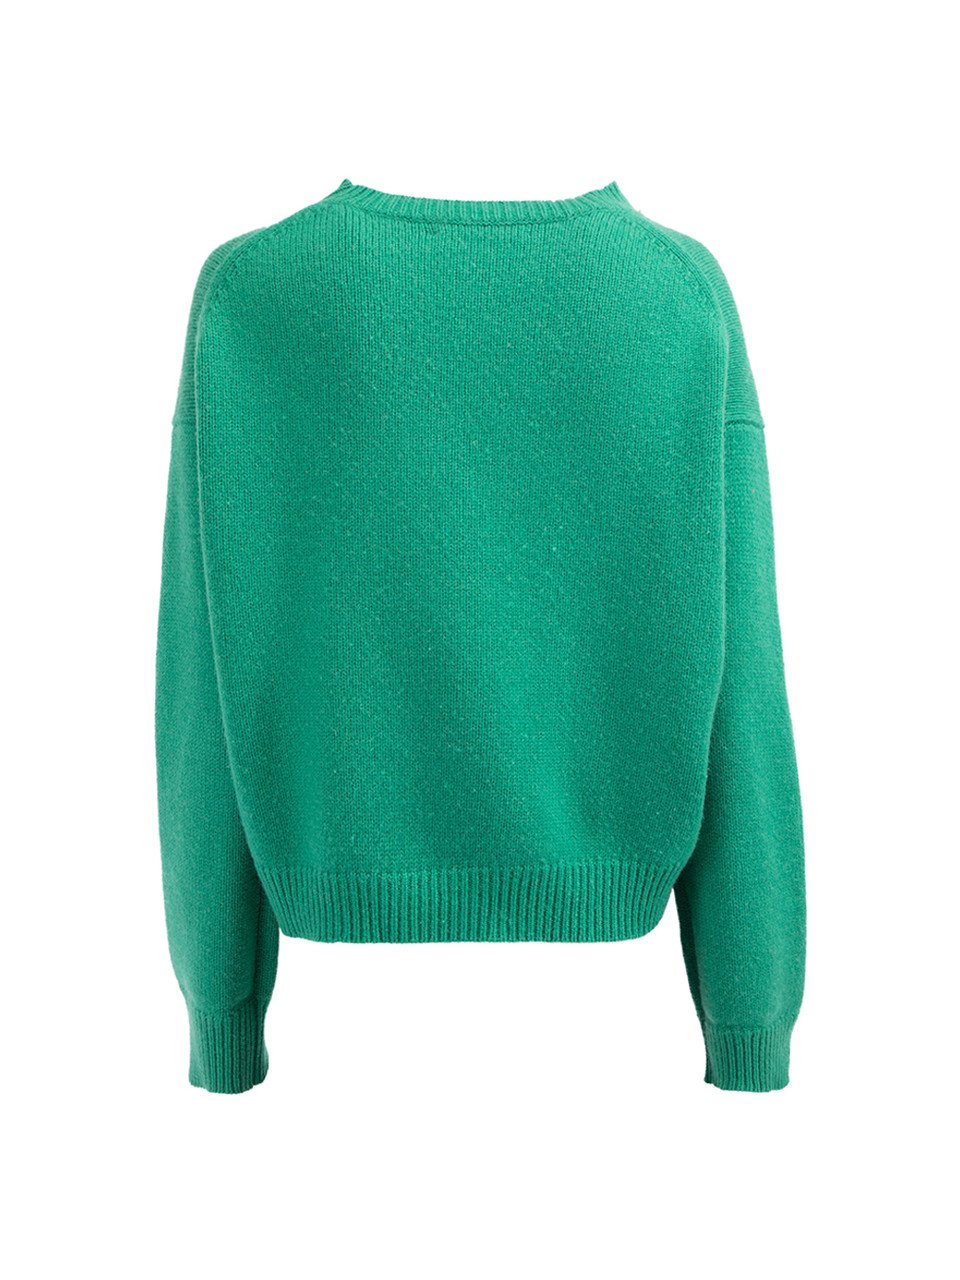 Green Cashmere Crewneck Sweater